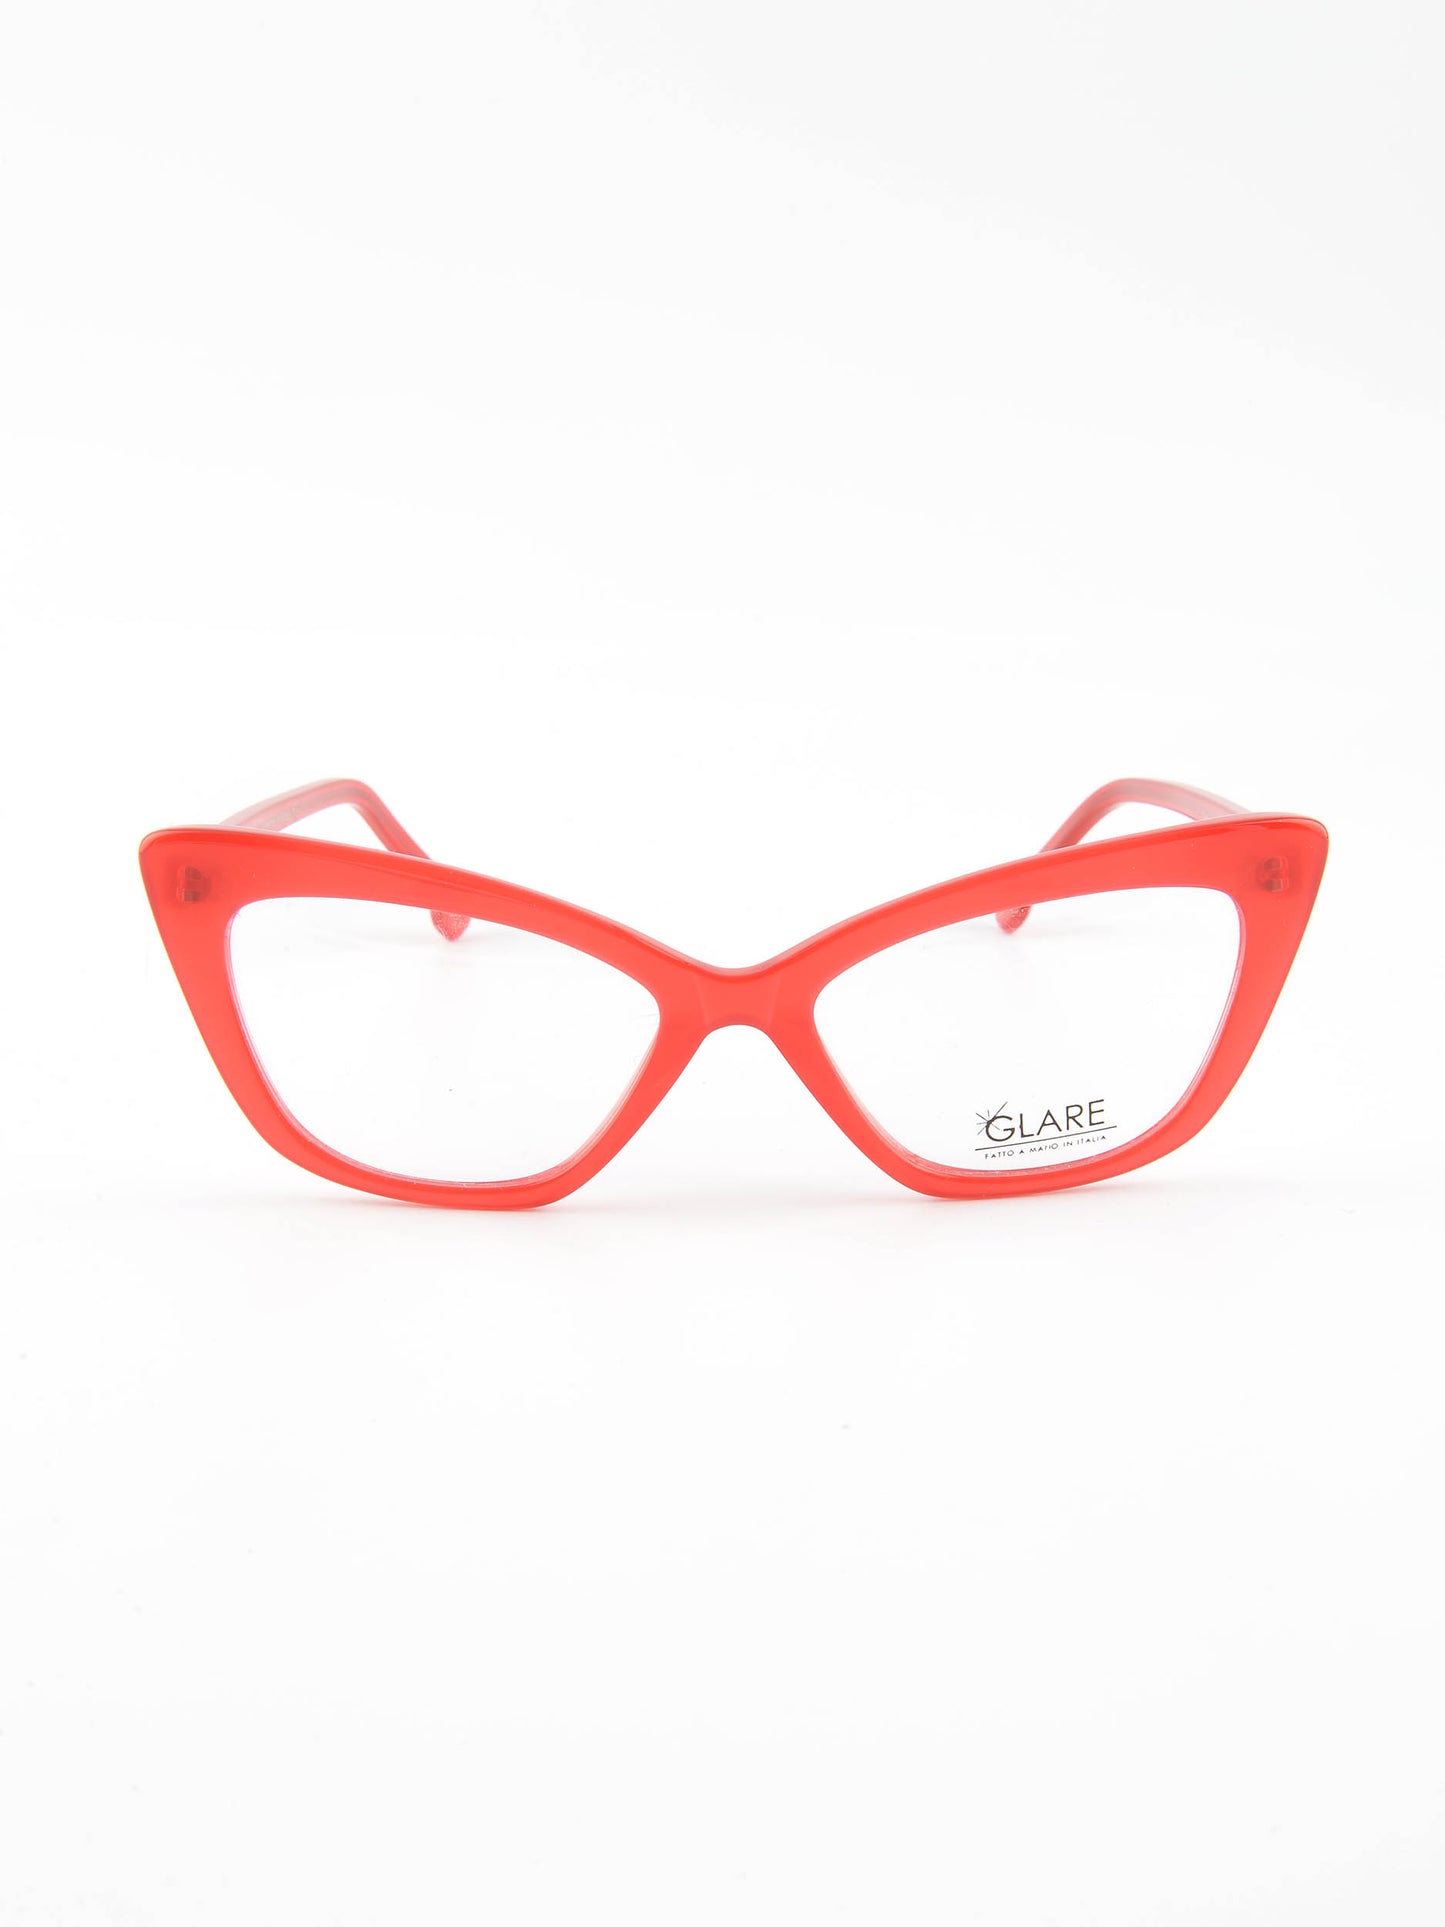 mod. Sofia, rosso, Glare, occhiale da Vista